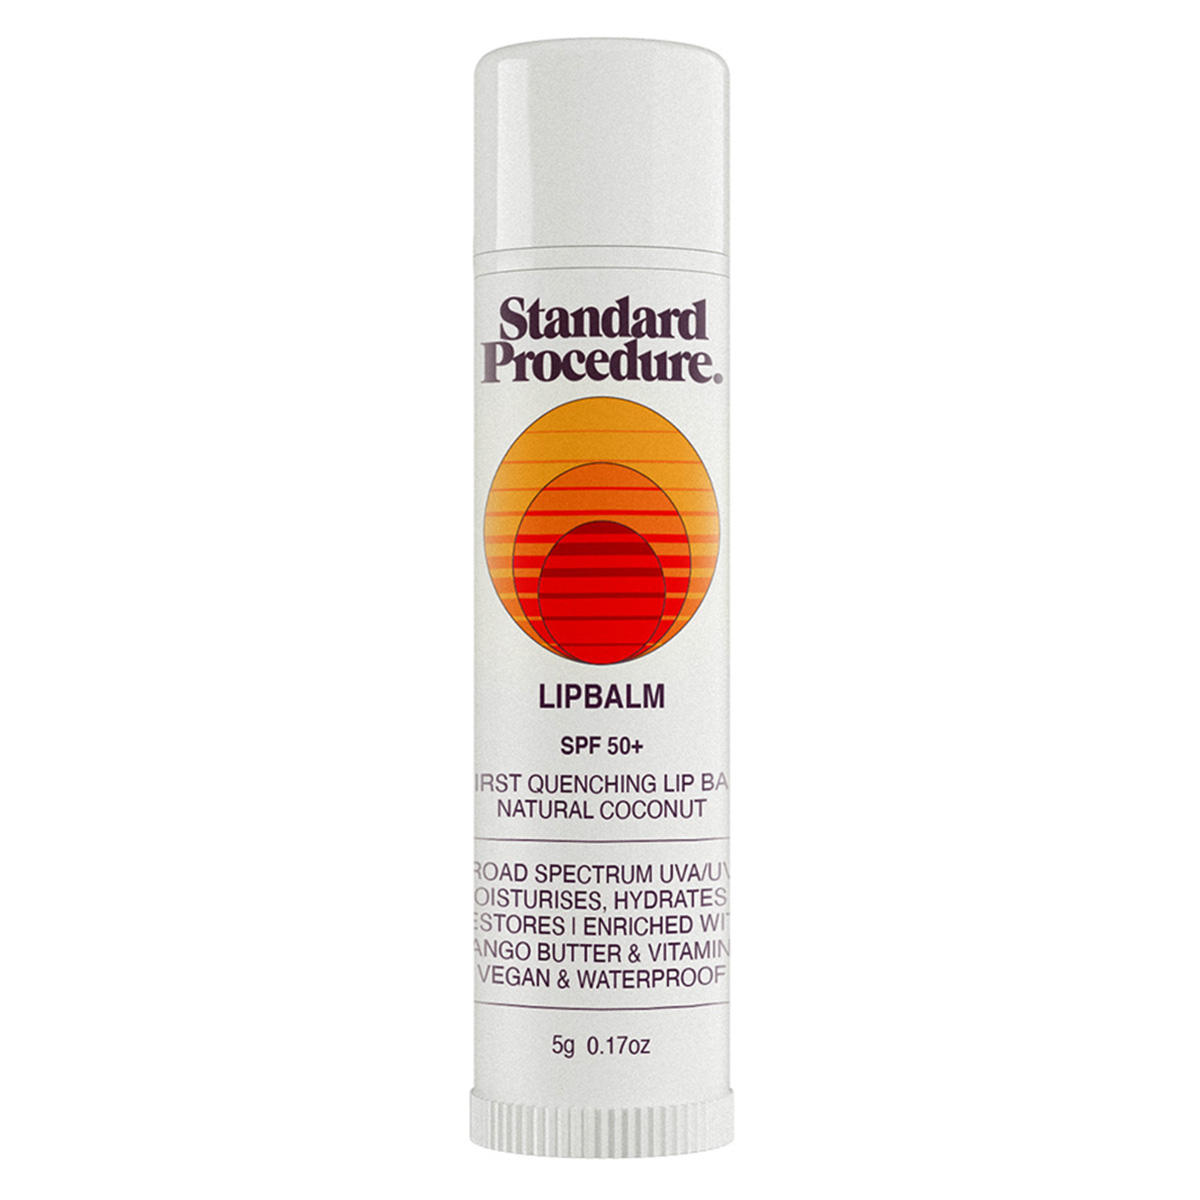 Standard Procedure Lip Balm SPF 50 5 g - 1